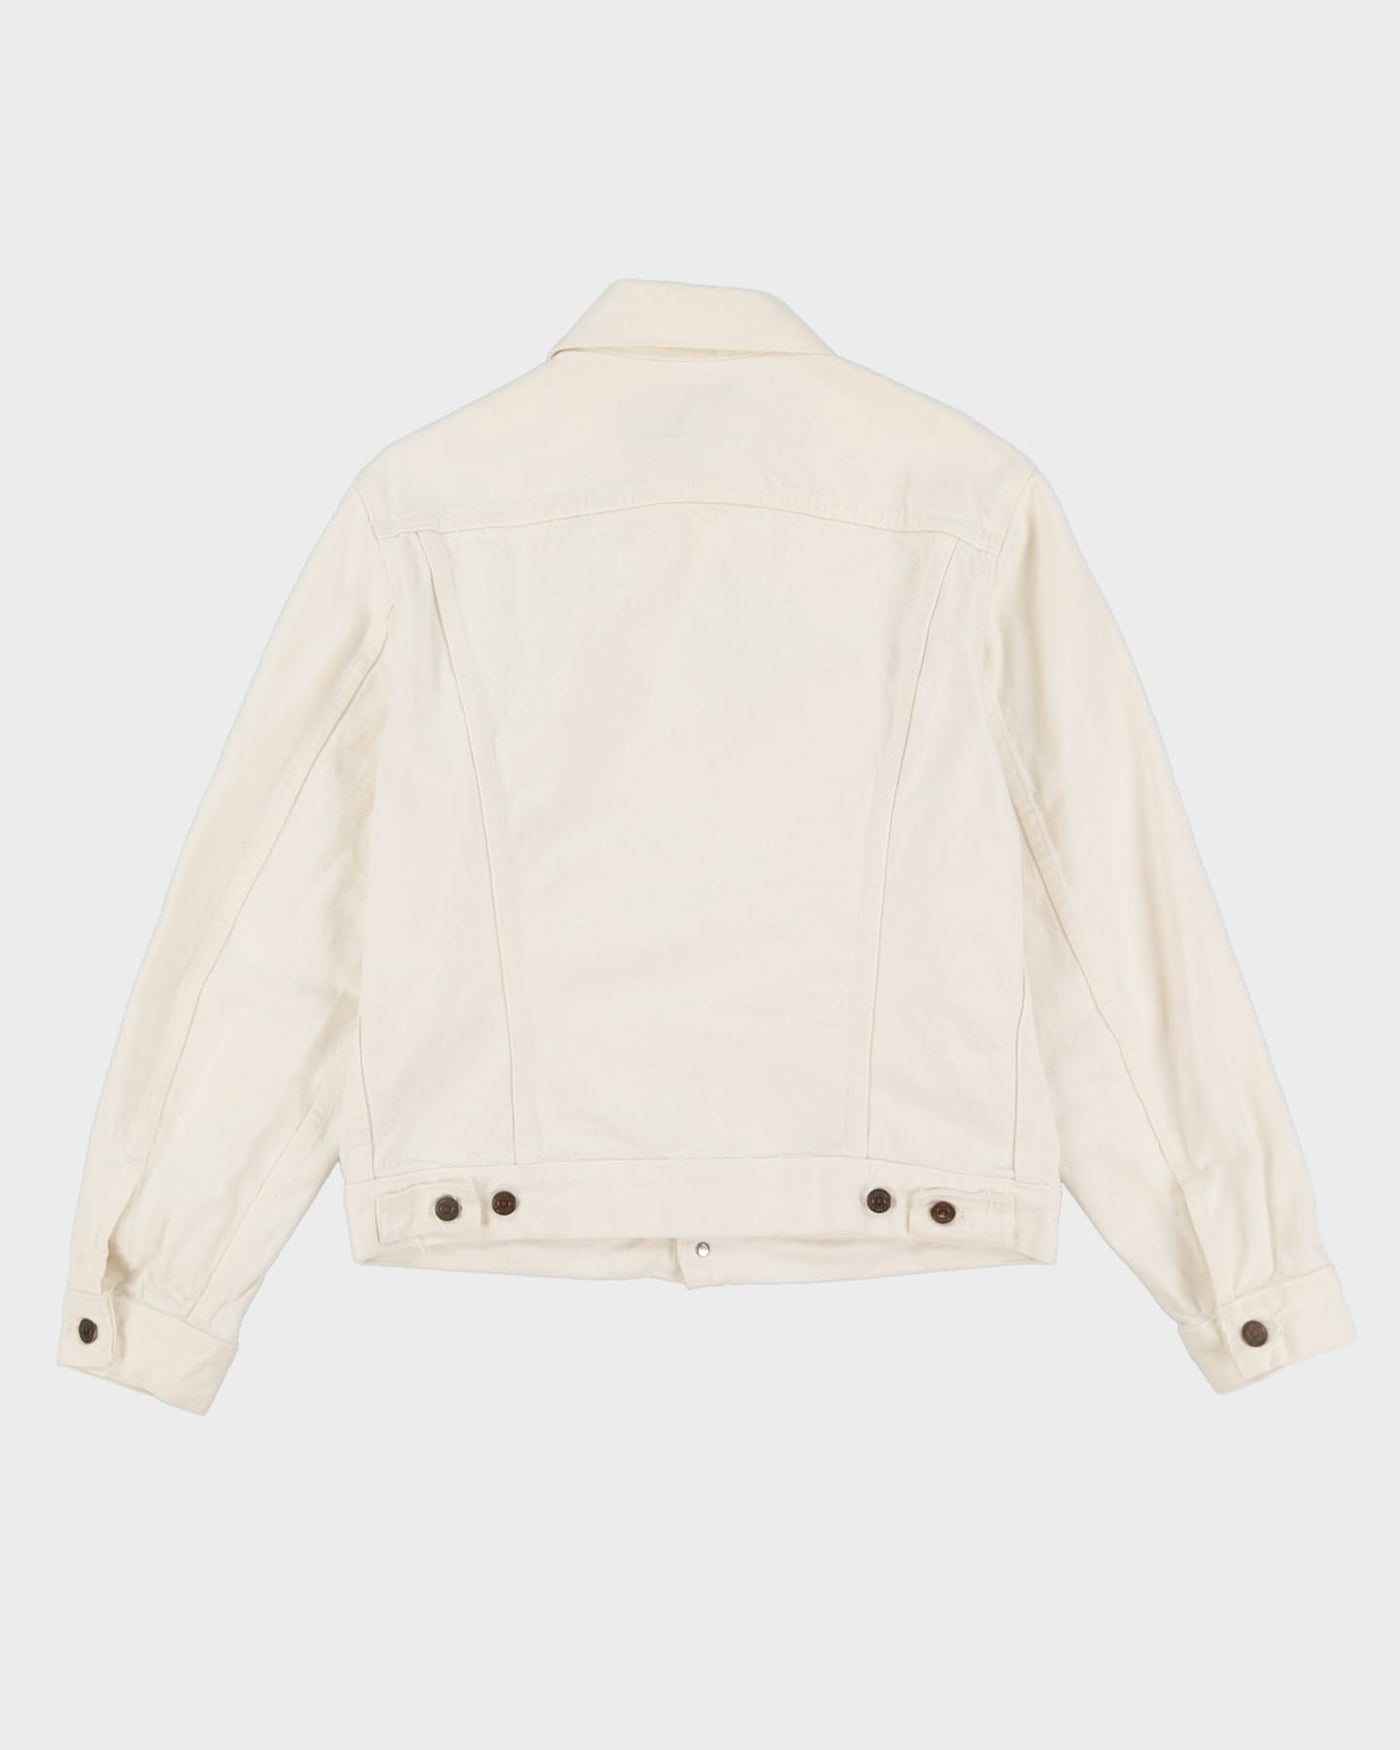 00s Levi's White Button Up Denim Jacket - S